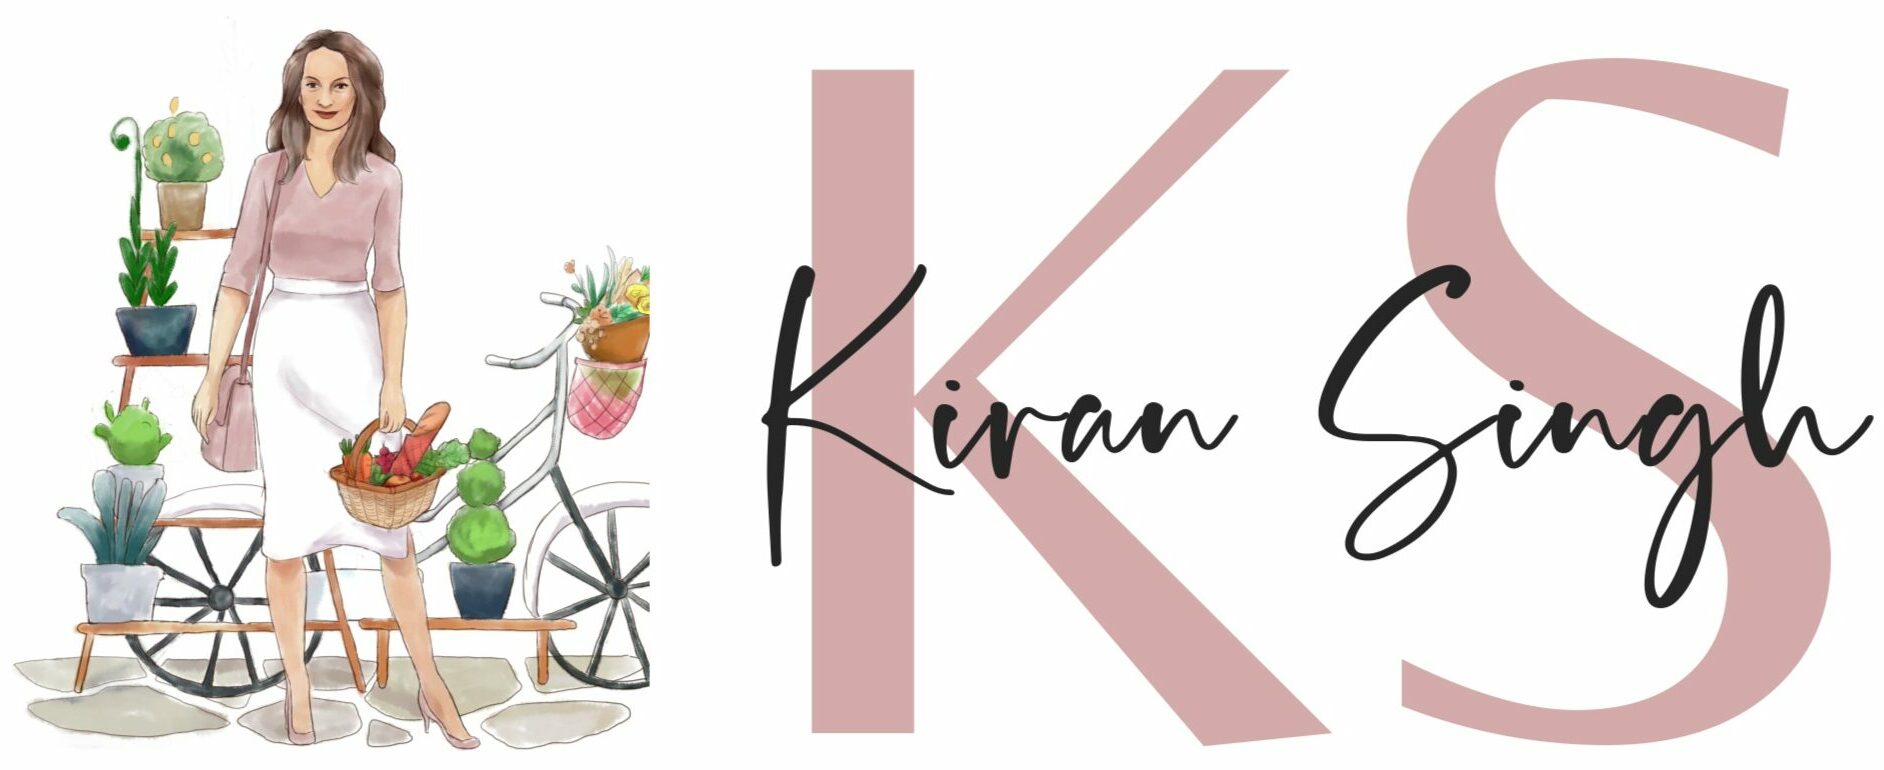 Kiran Singh logo